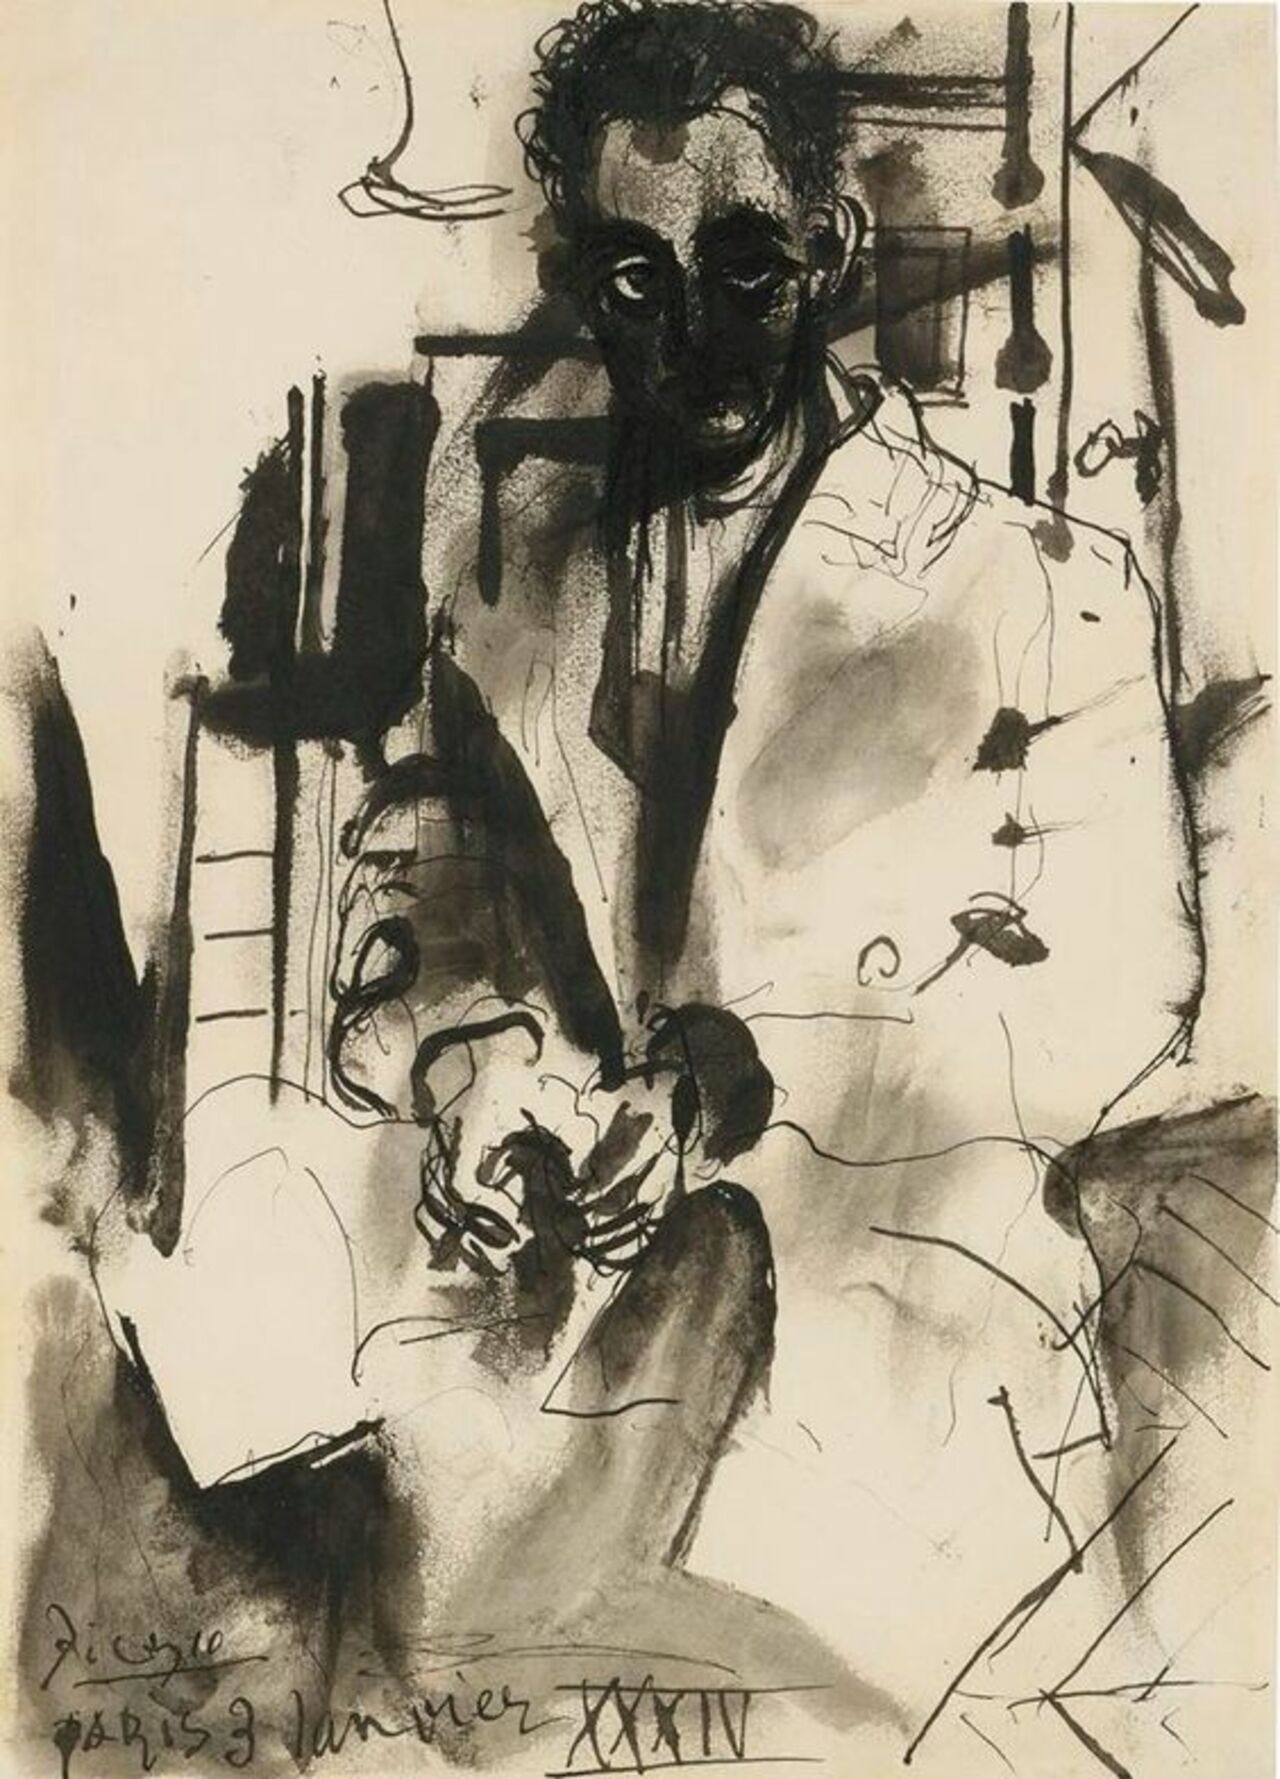 RT @Mr_Mustard: 'Portrait Of Man Ray' (1934) - Pablo Picasso https://t.co/EcTKkLbh8L via @literatura_rte